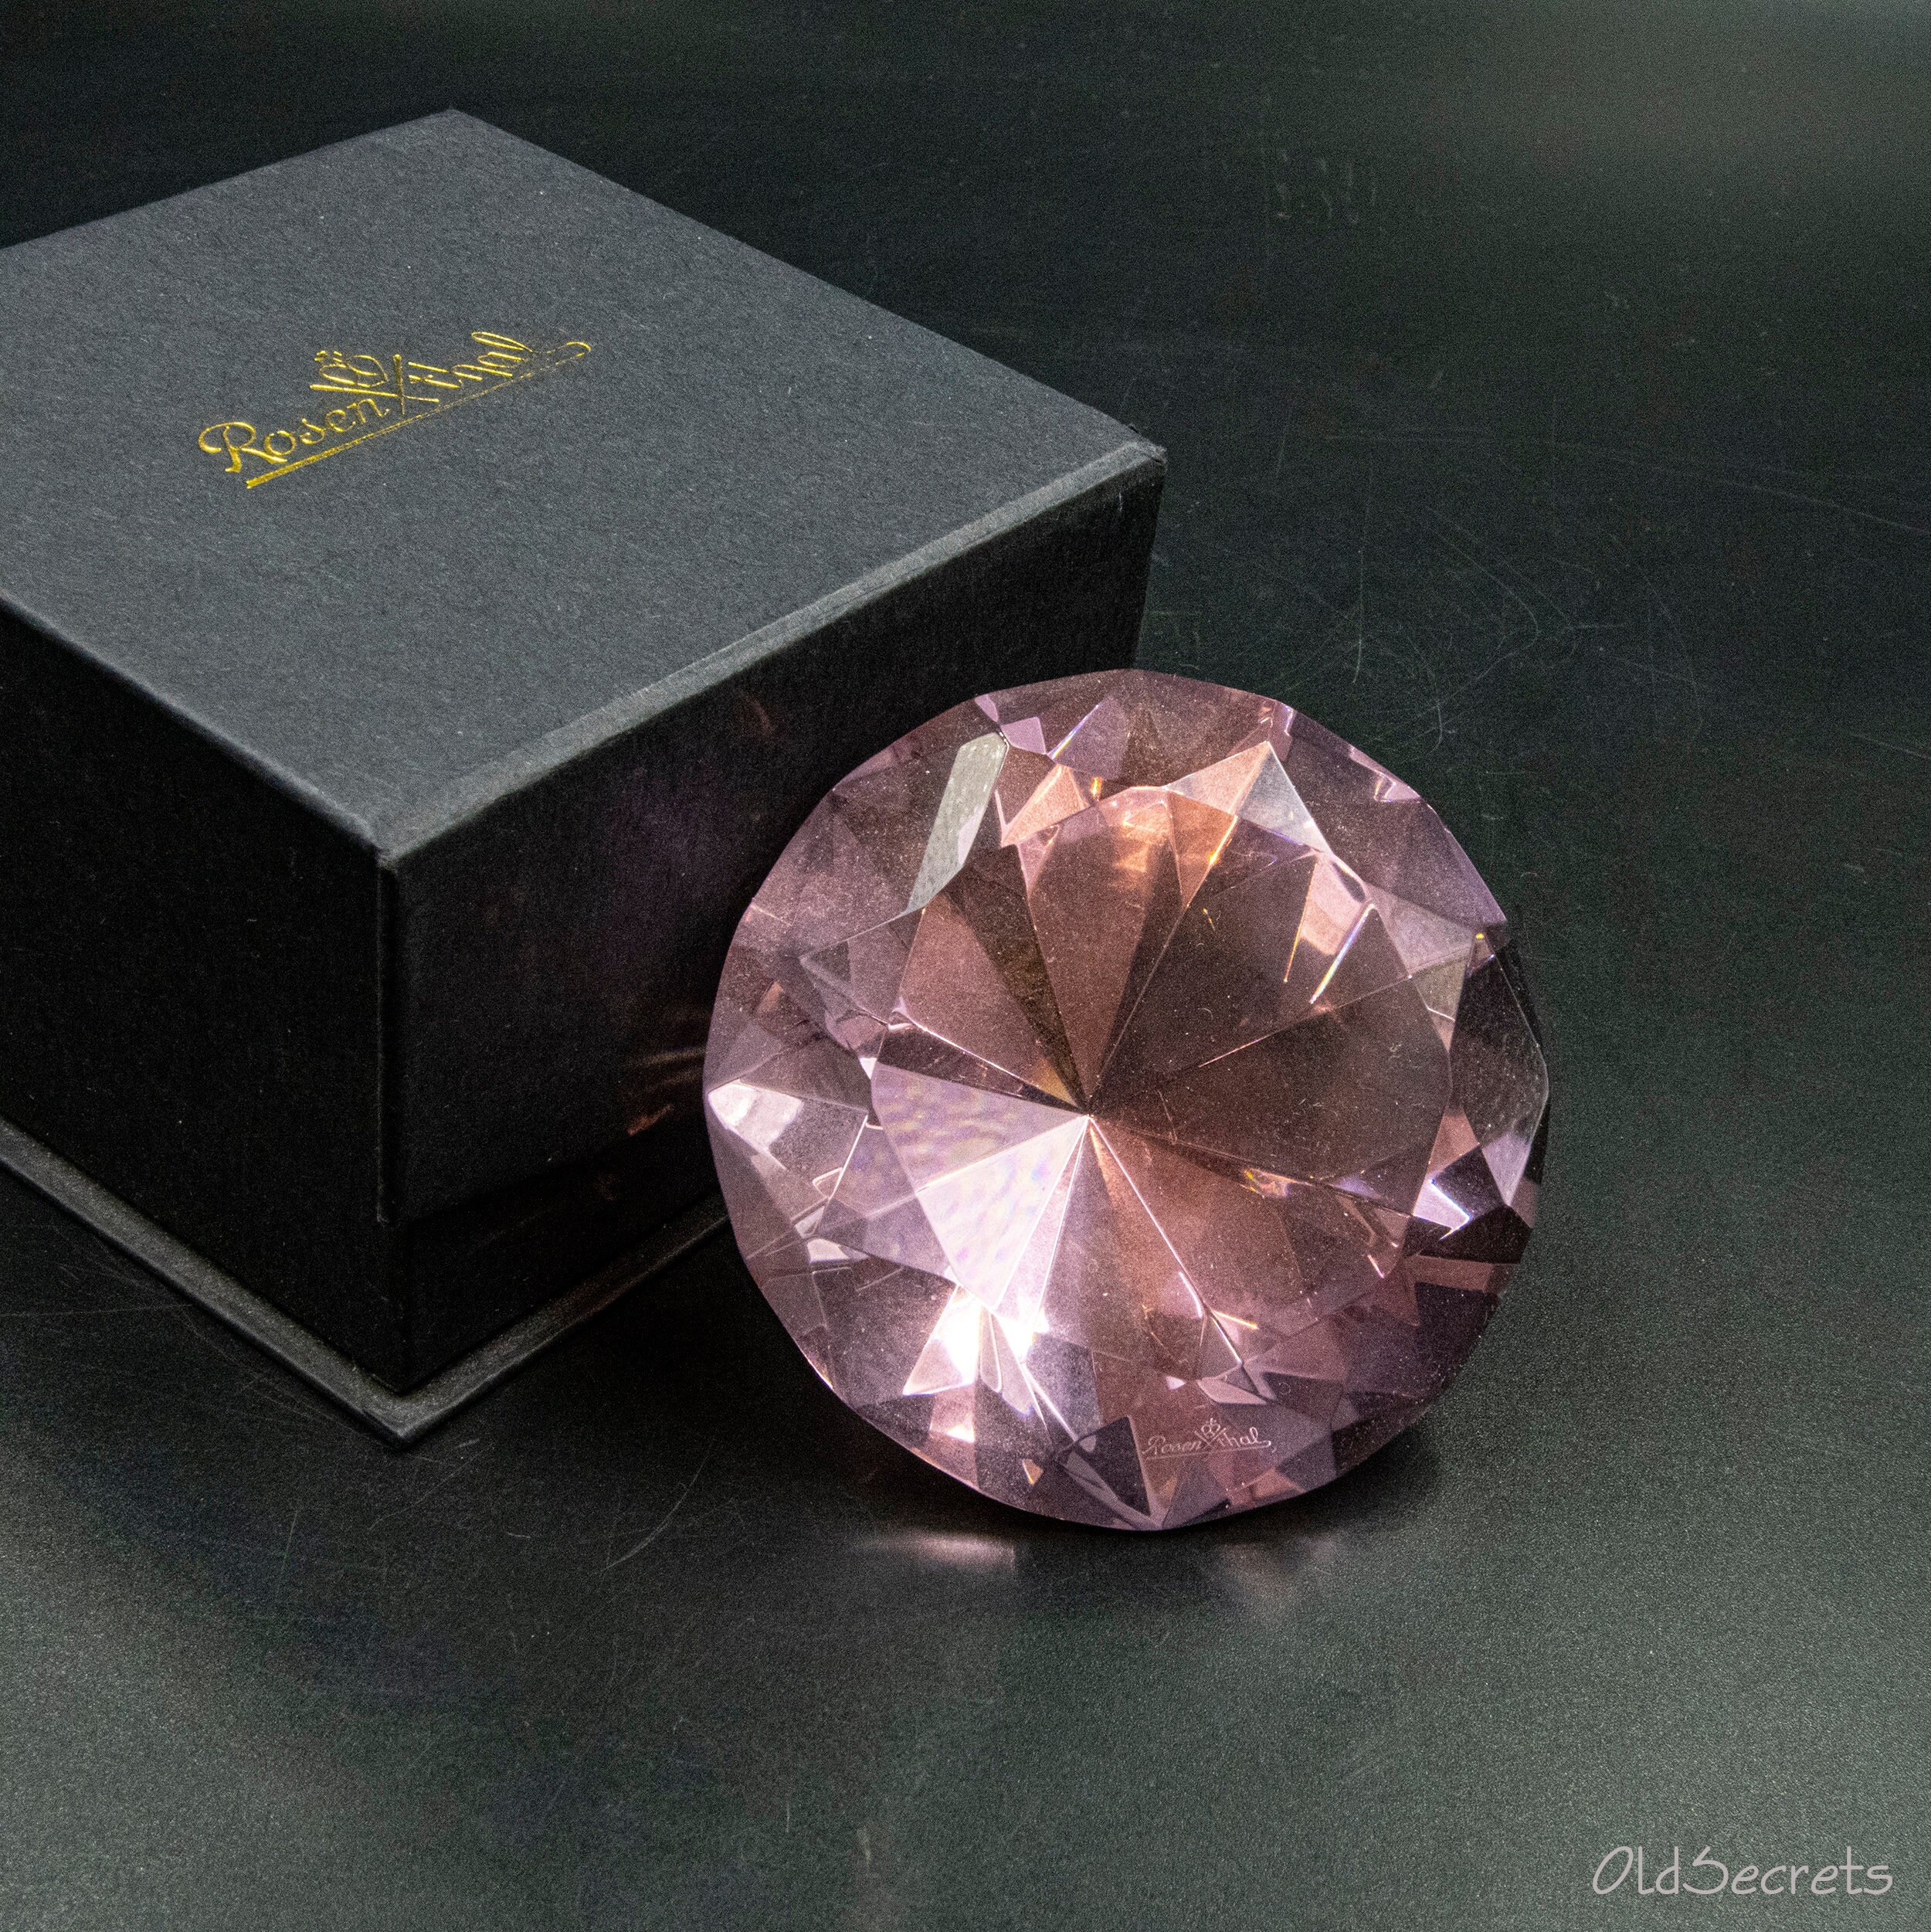 Original Rosenthal Crystal Diamond Large Paperweight - Etsy New Zealand